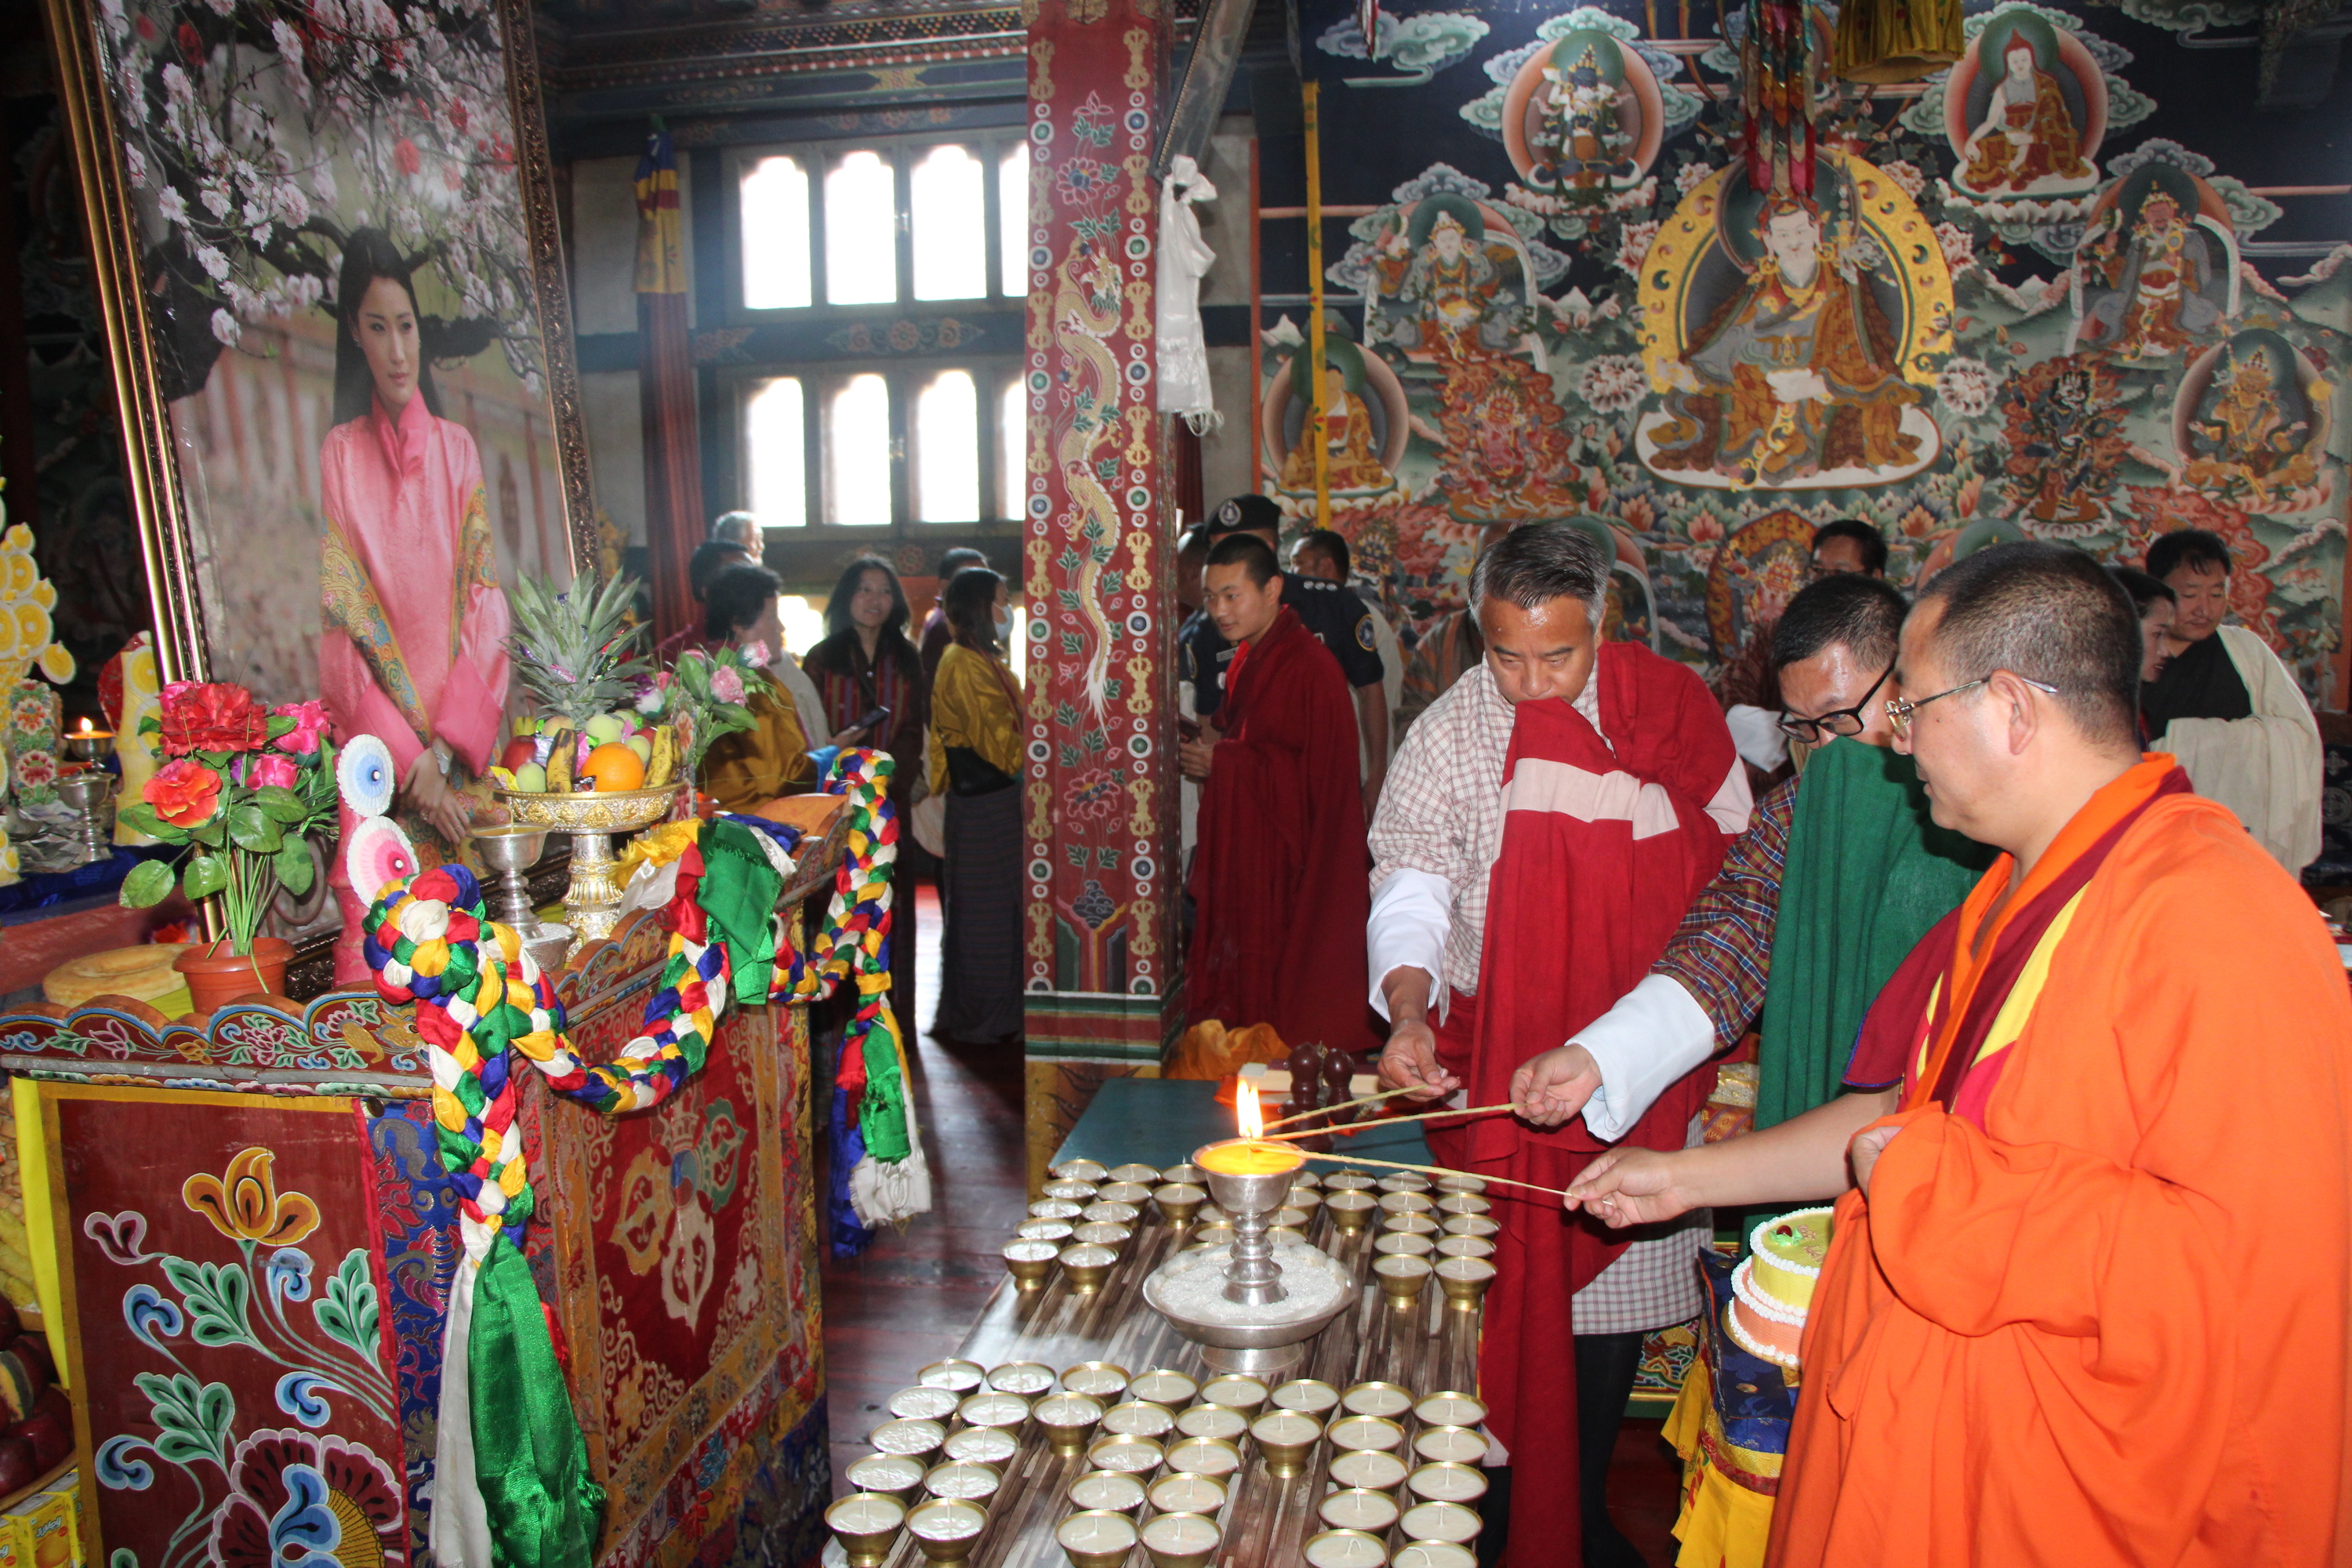  The 33rd Birth Anniversary of Her majesty the Gyaltsuen Jetsuen Pema Wangchuck